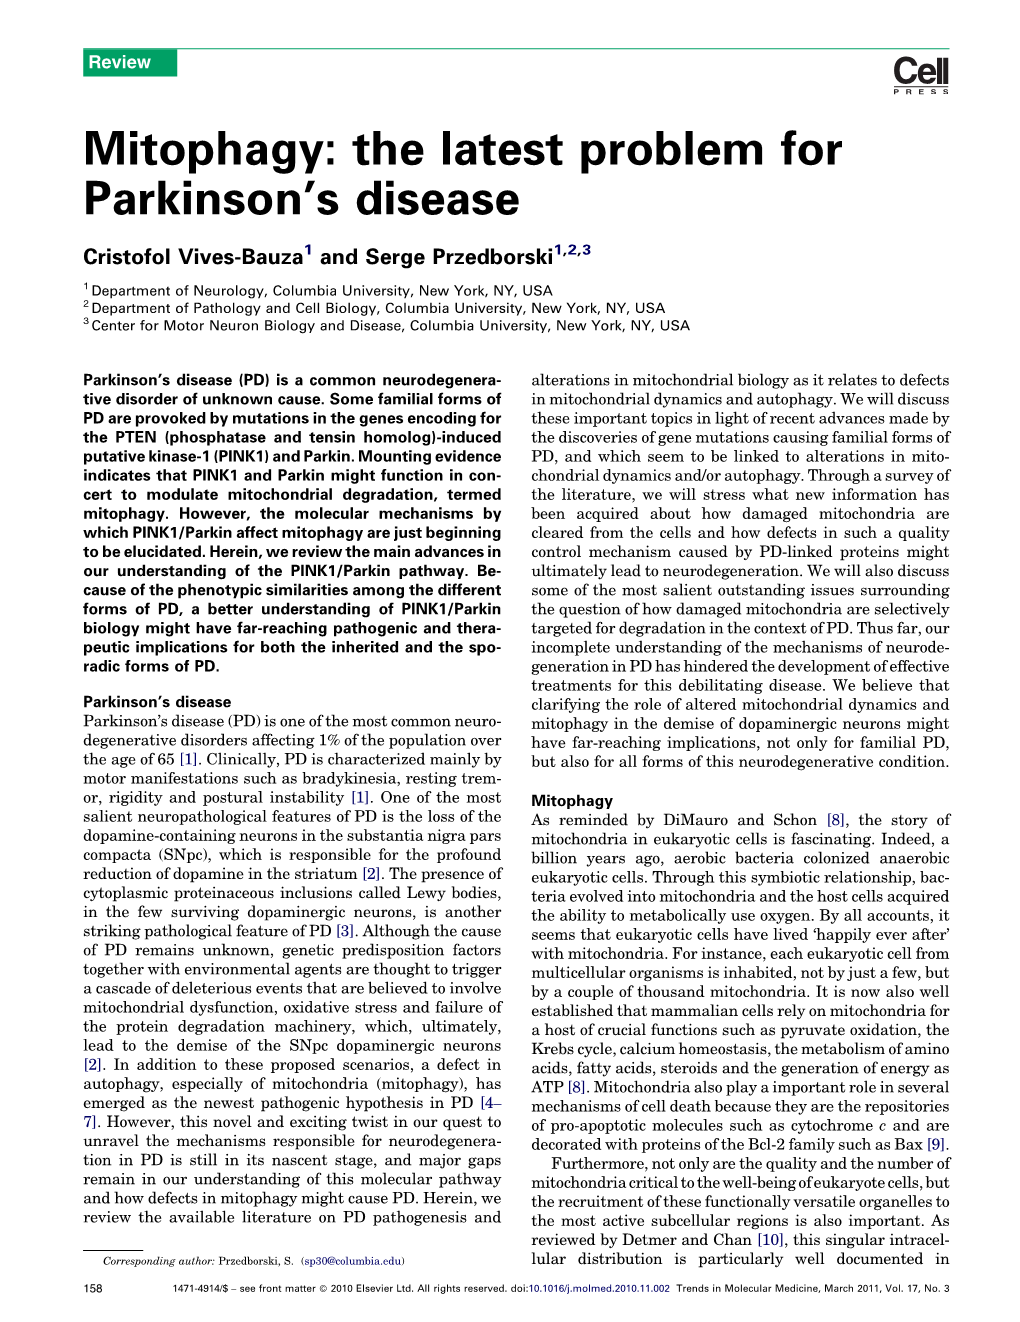 Mitophagy: the Latest Problem for Parkinson's Disease